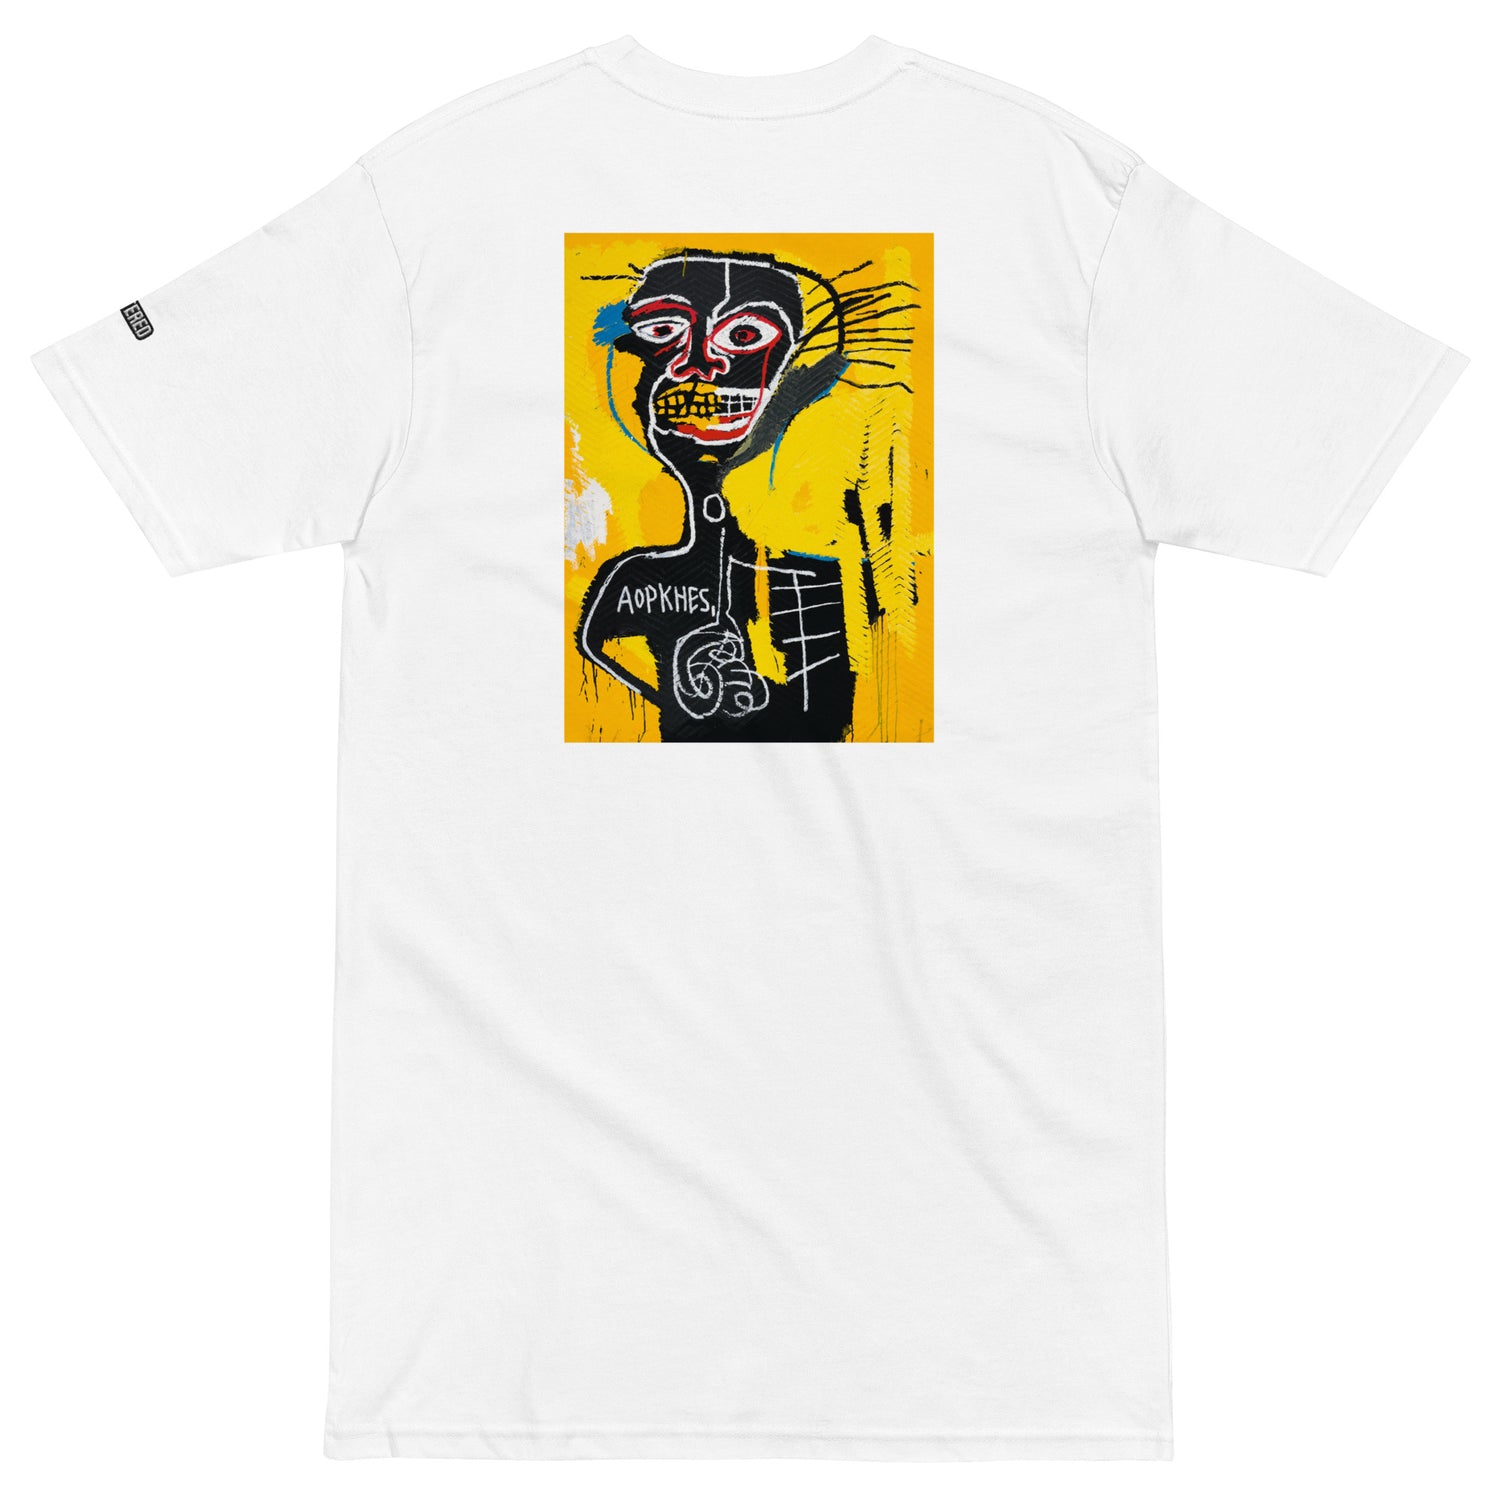 Jean-Michel Basquiat "Cabeza" Artwork Embroidered + Printed Premium White Streetwear T-shirt Scattered